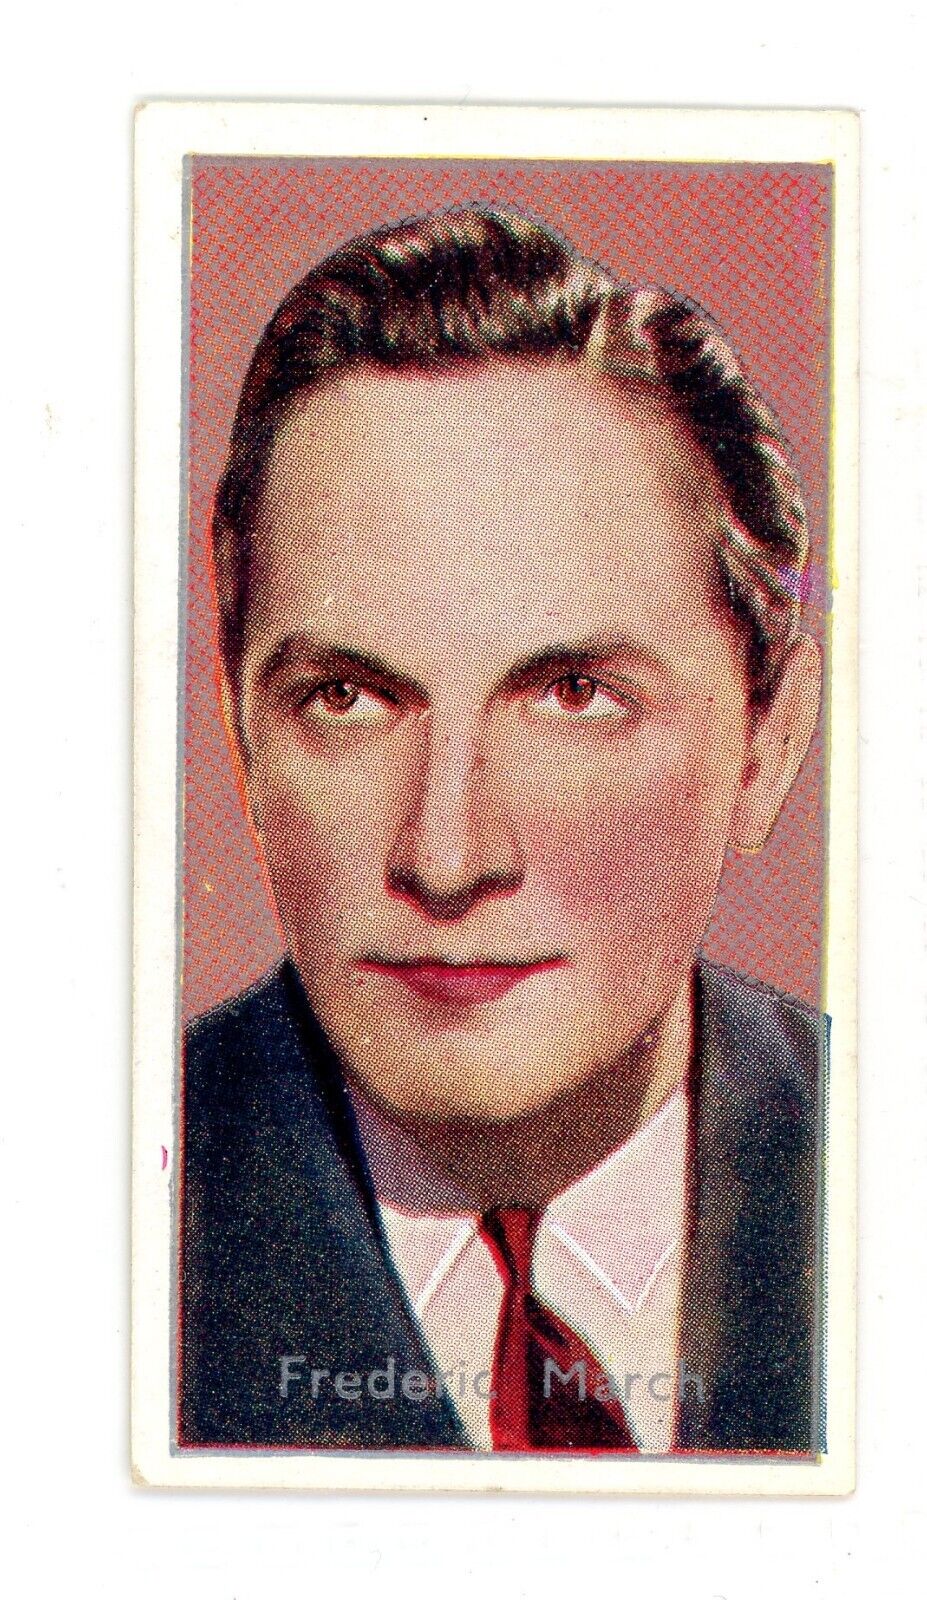 Frederic March 27 Carreras LTD Film Stars 1934 F Desmond Series Of 50 Hollywood